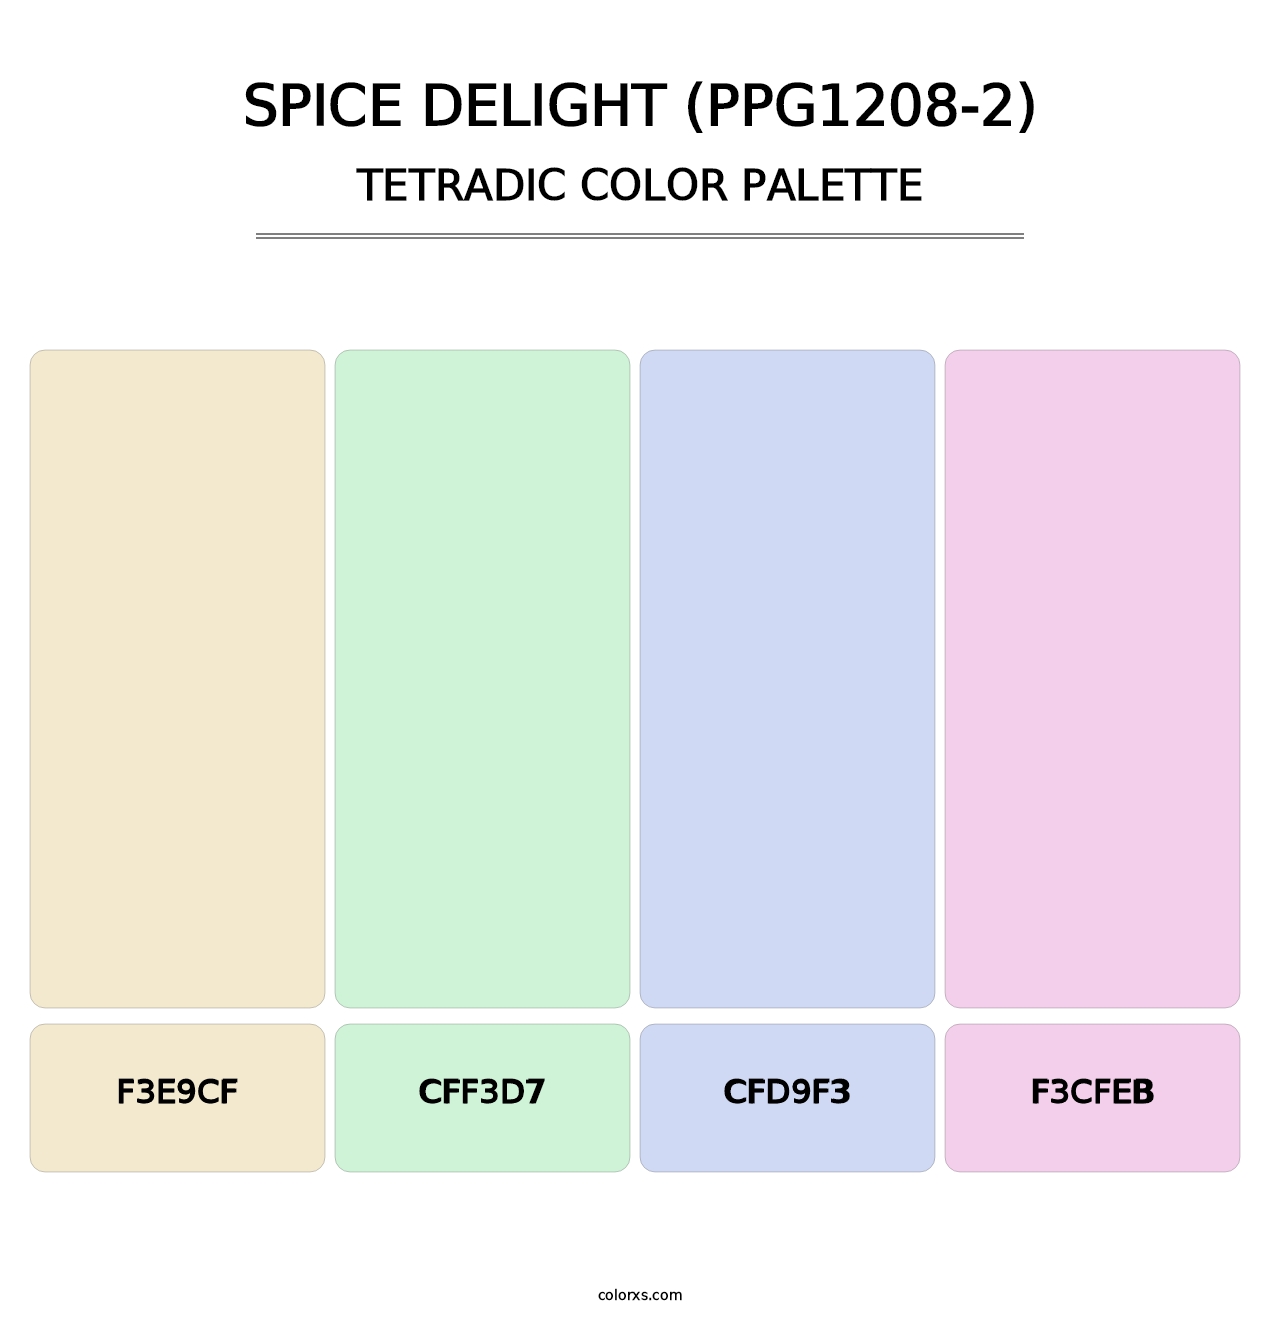 Spice Delight (PPG1208-2) - Tetradic Color Palette